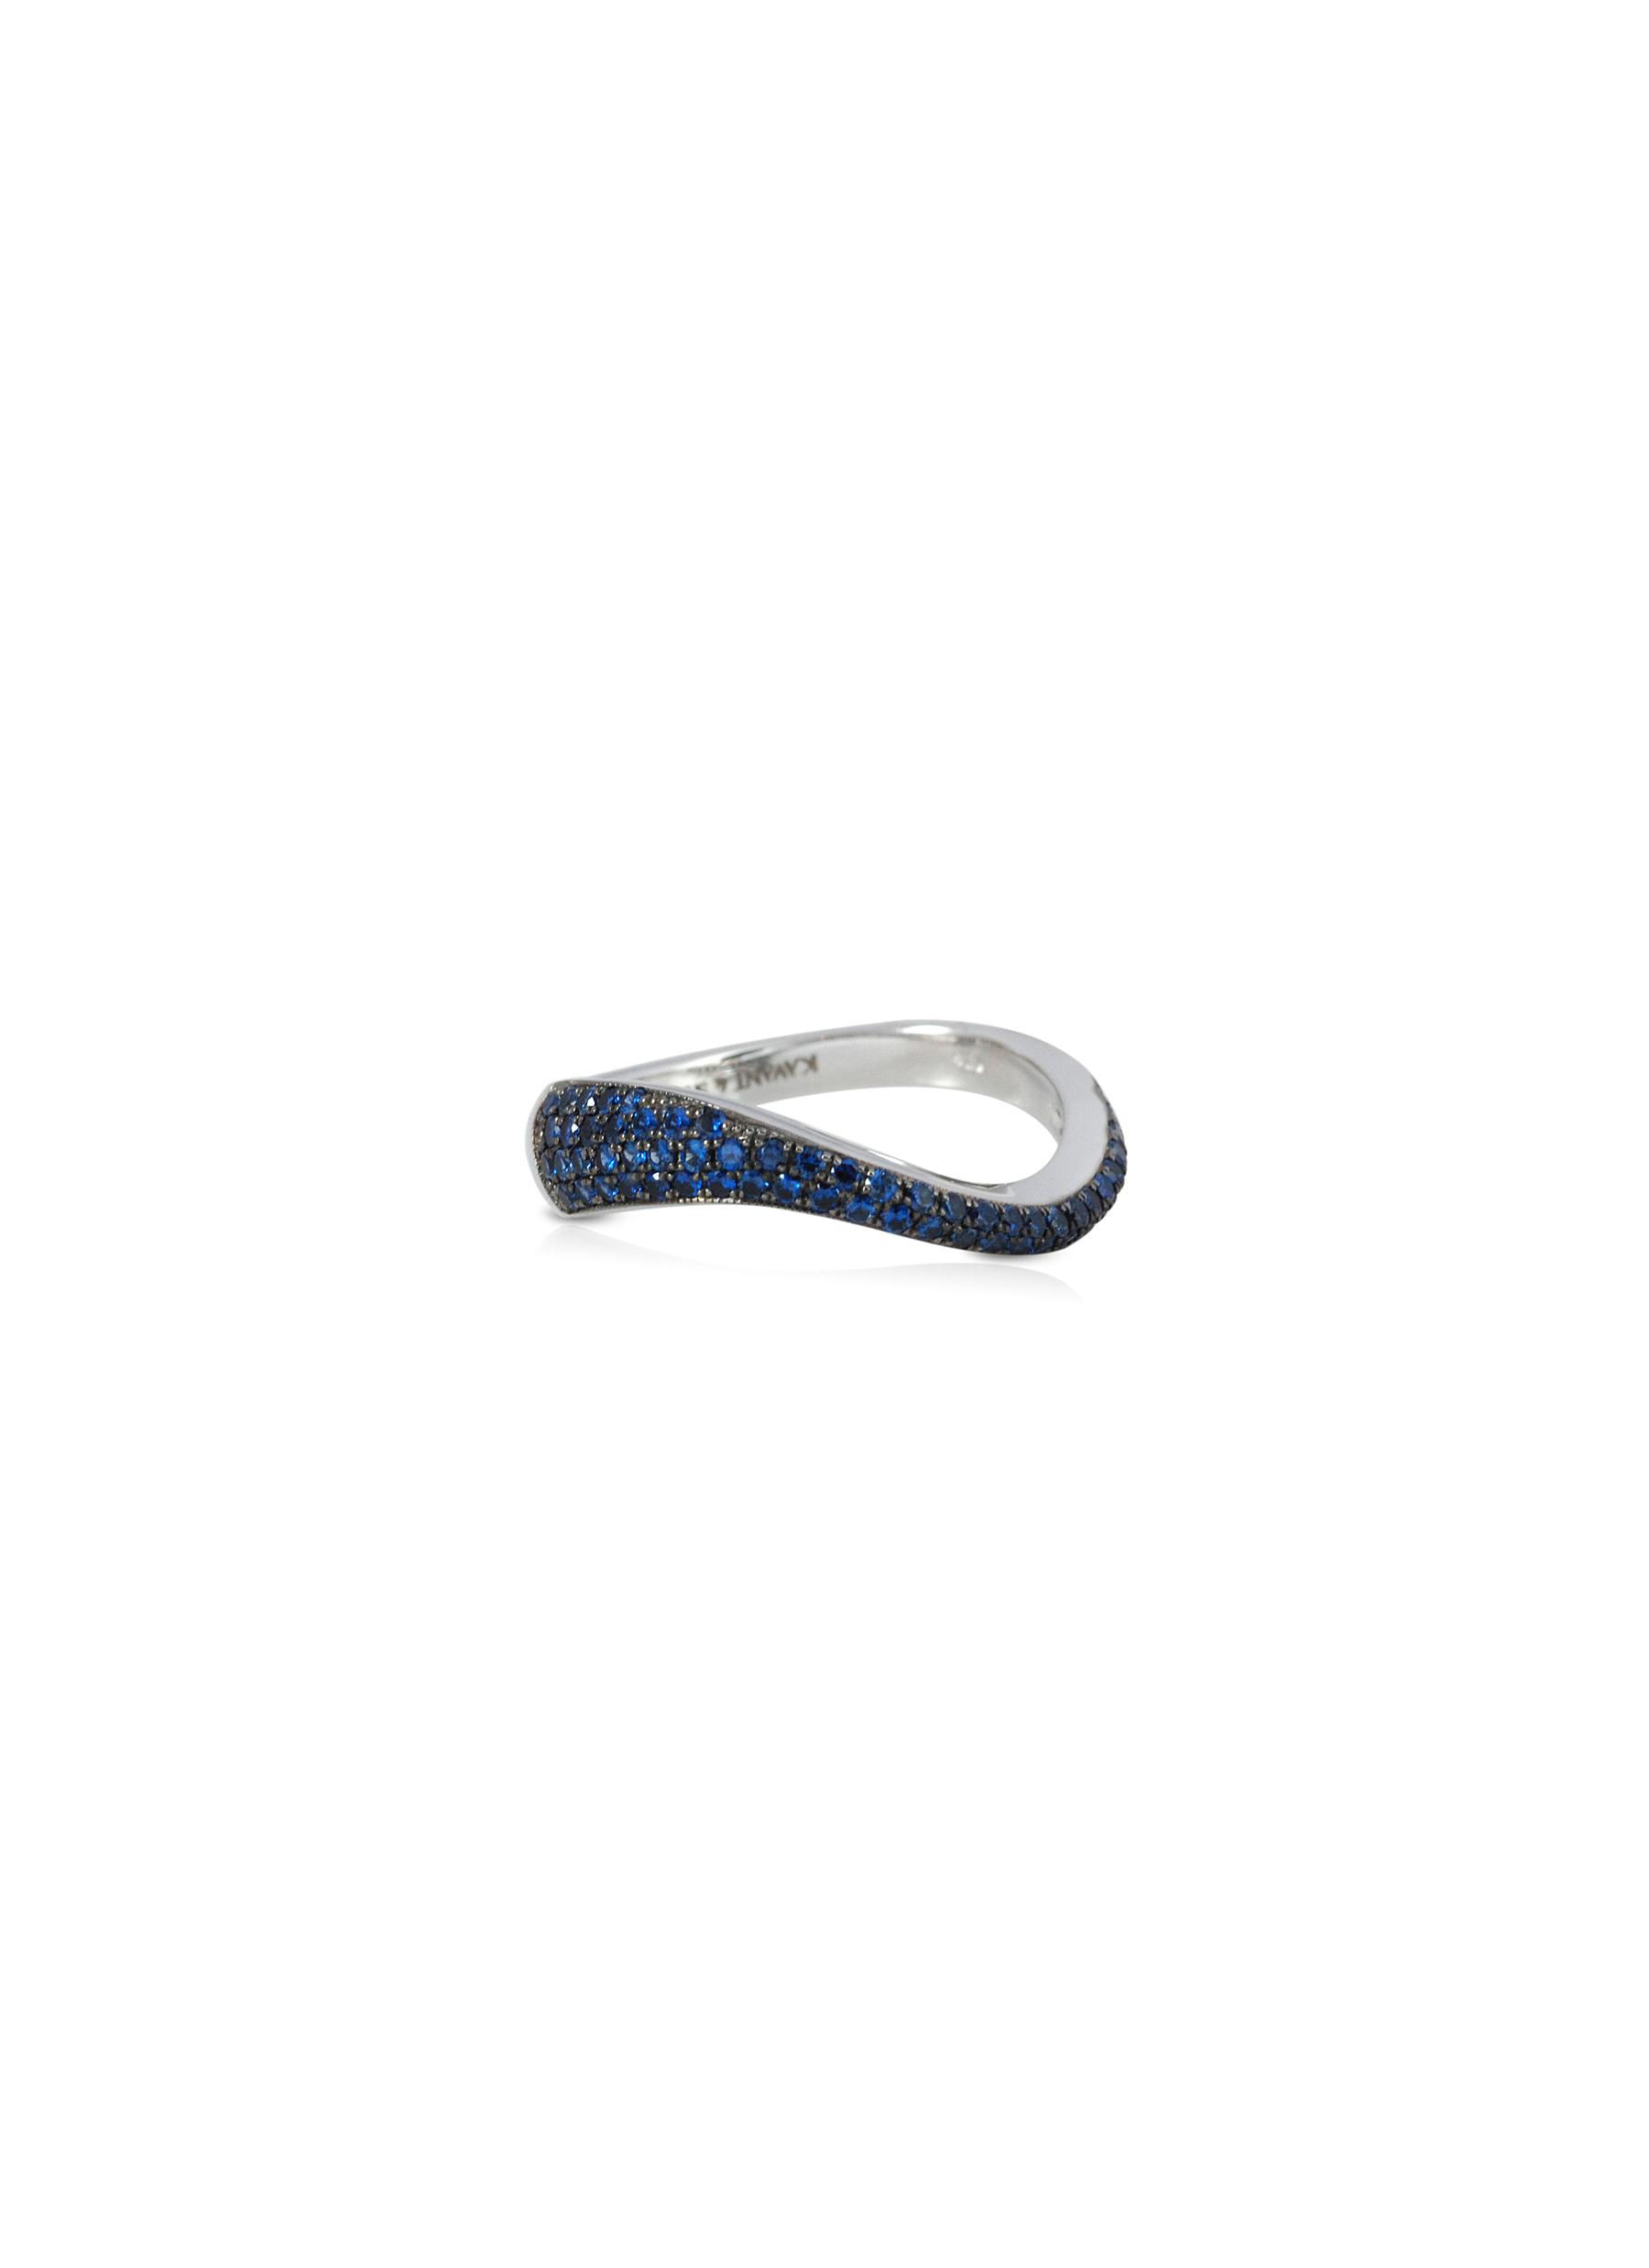 KAVANT & SHARART ‘Talay' Micro Sapphire Pavé 18K White Gold Wave Ring